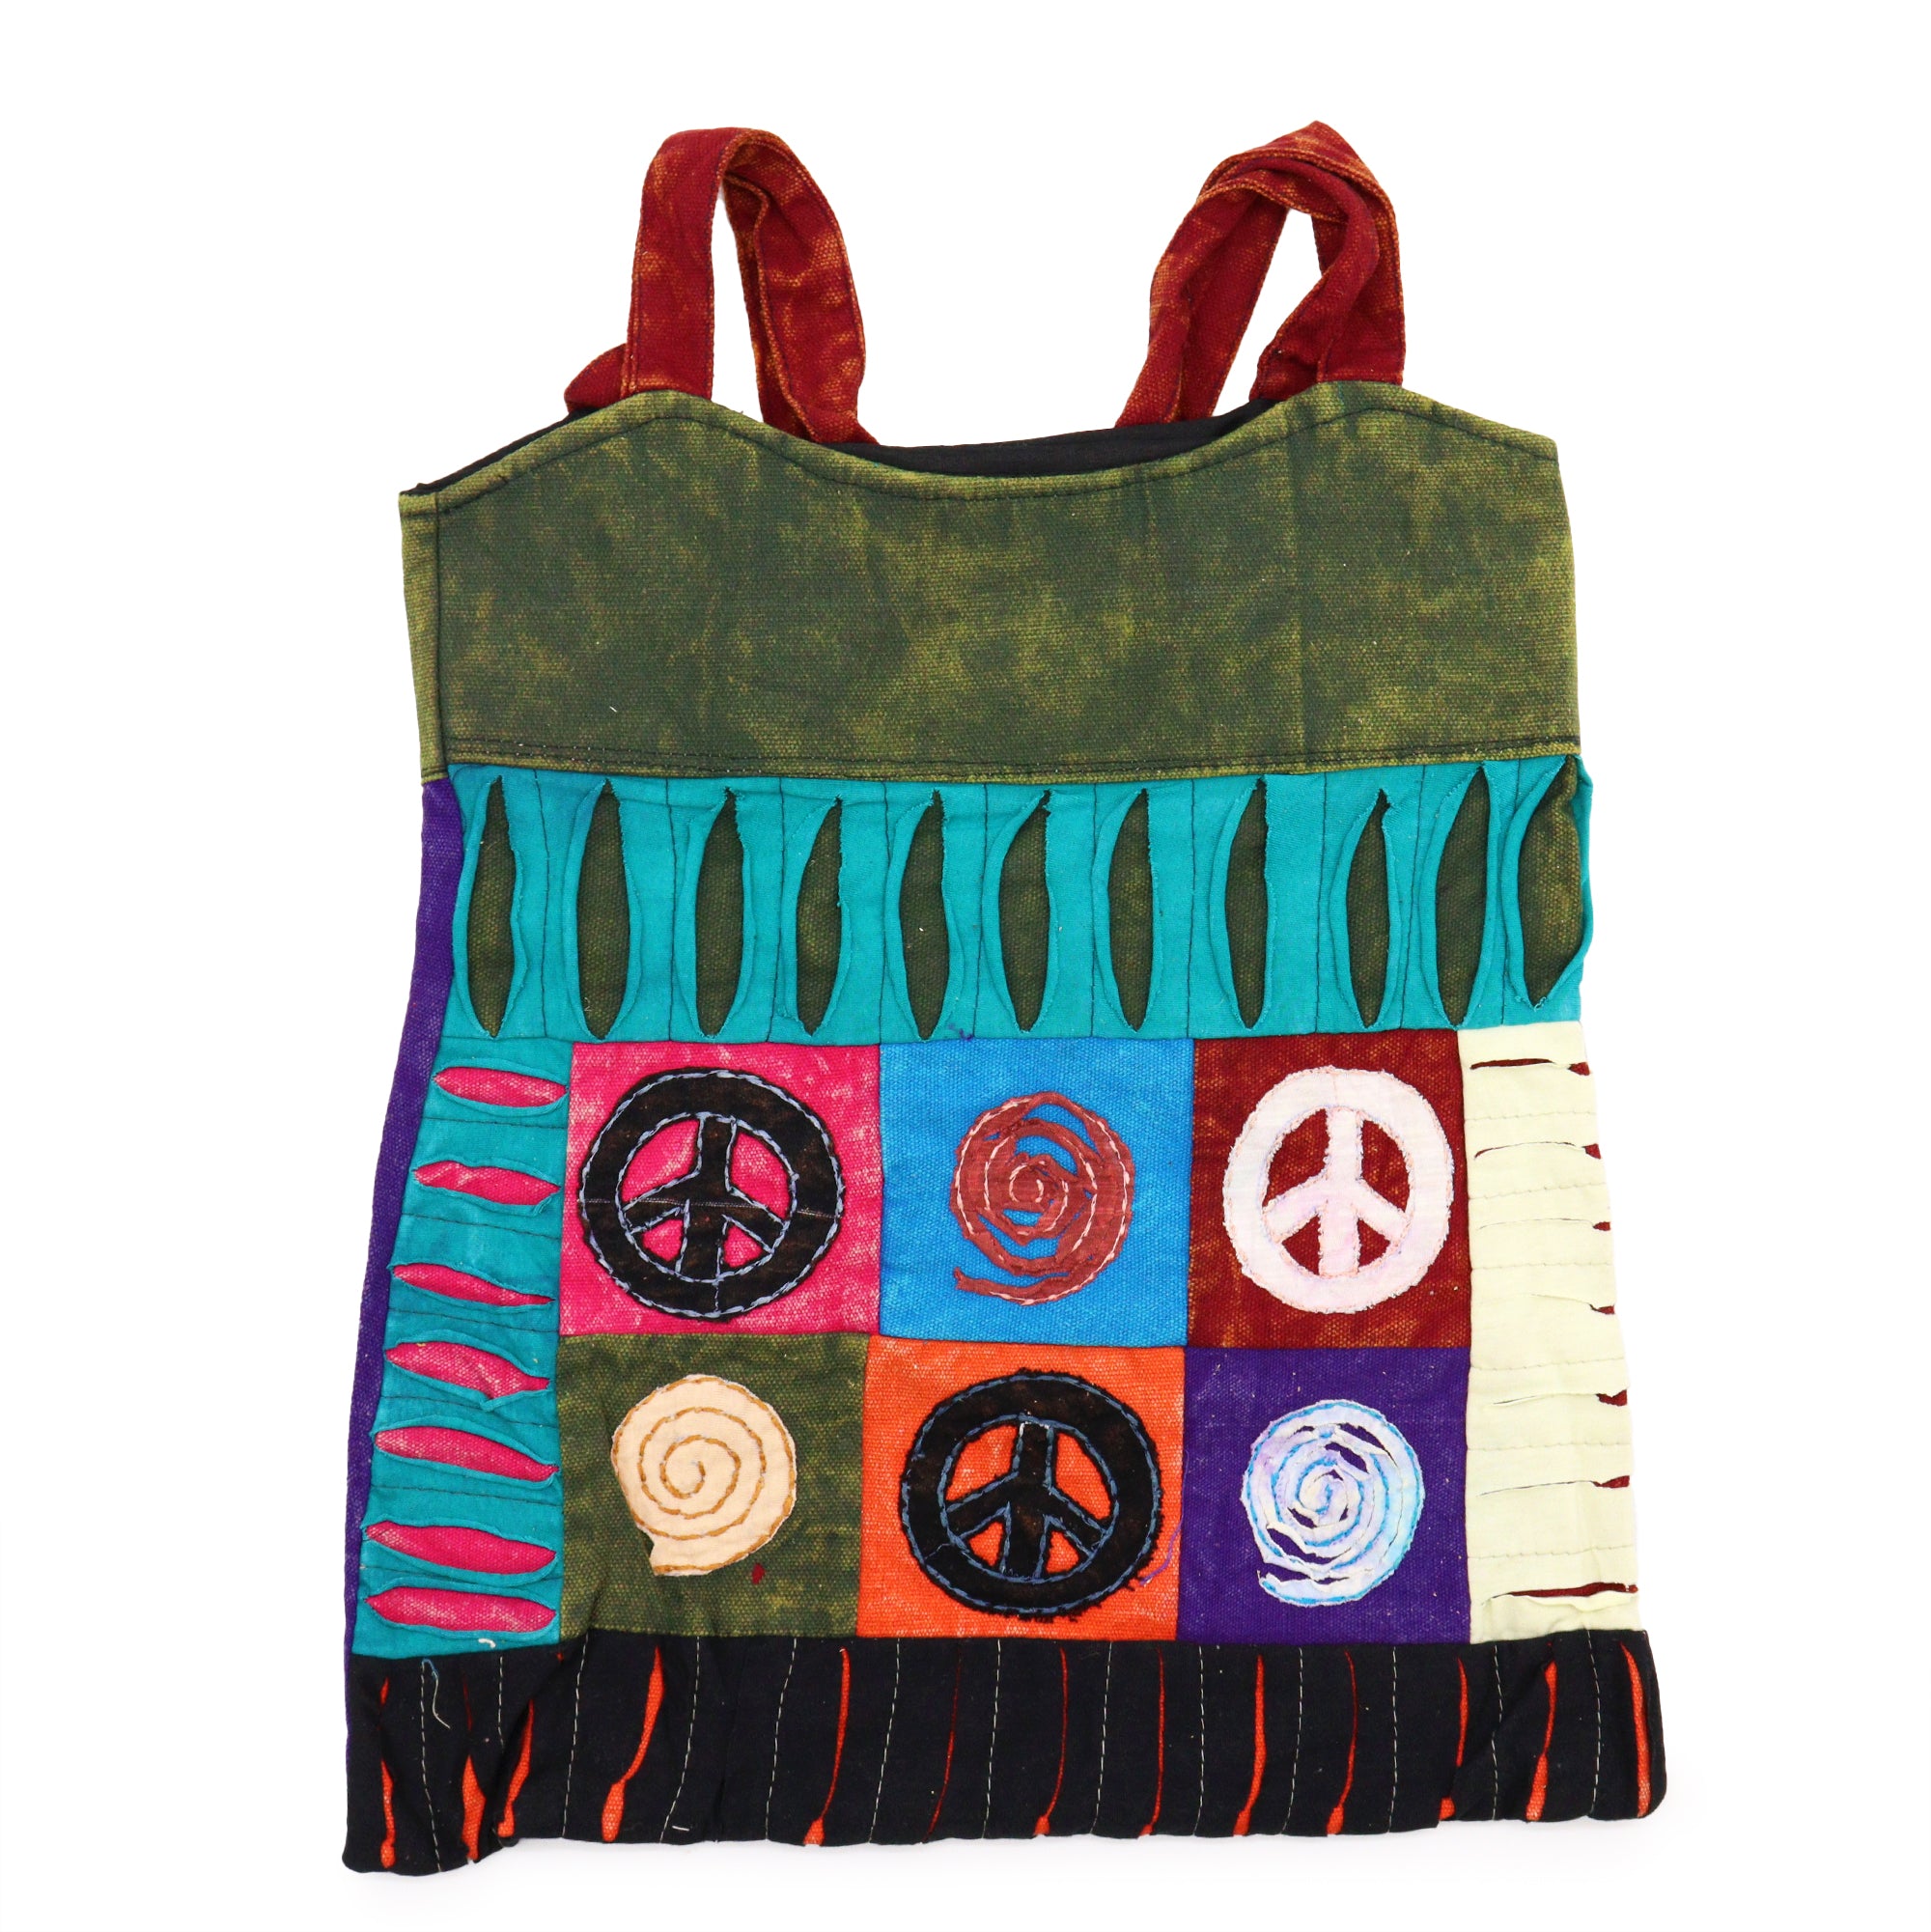 View Classic Peace Skirt Bags asst des information